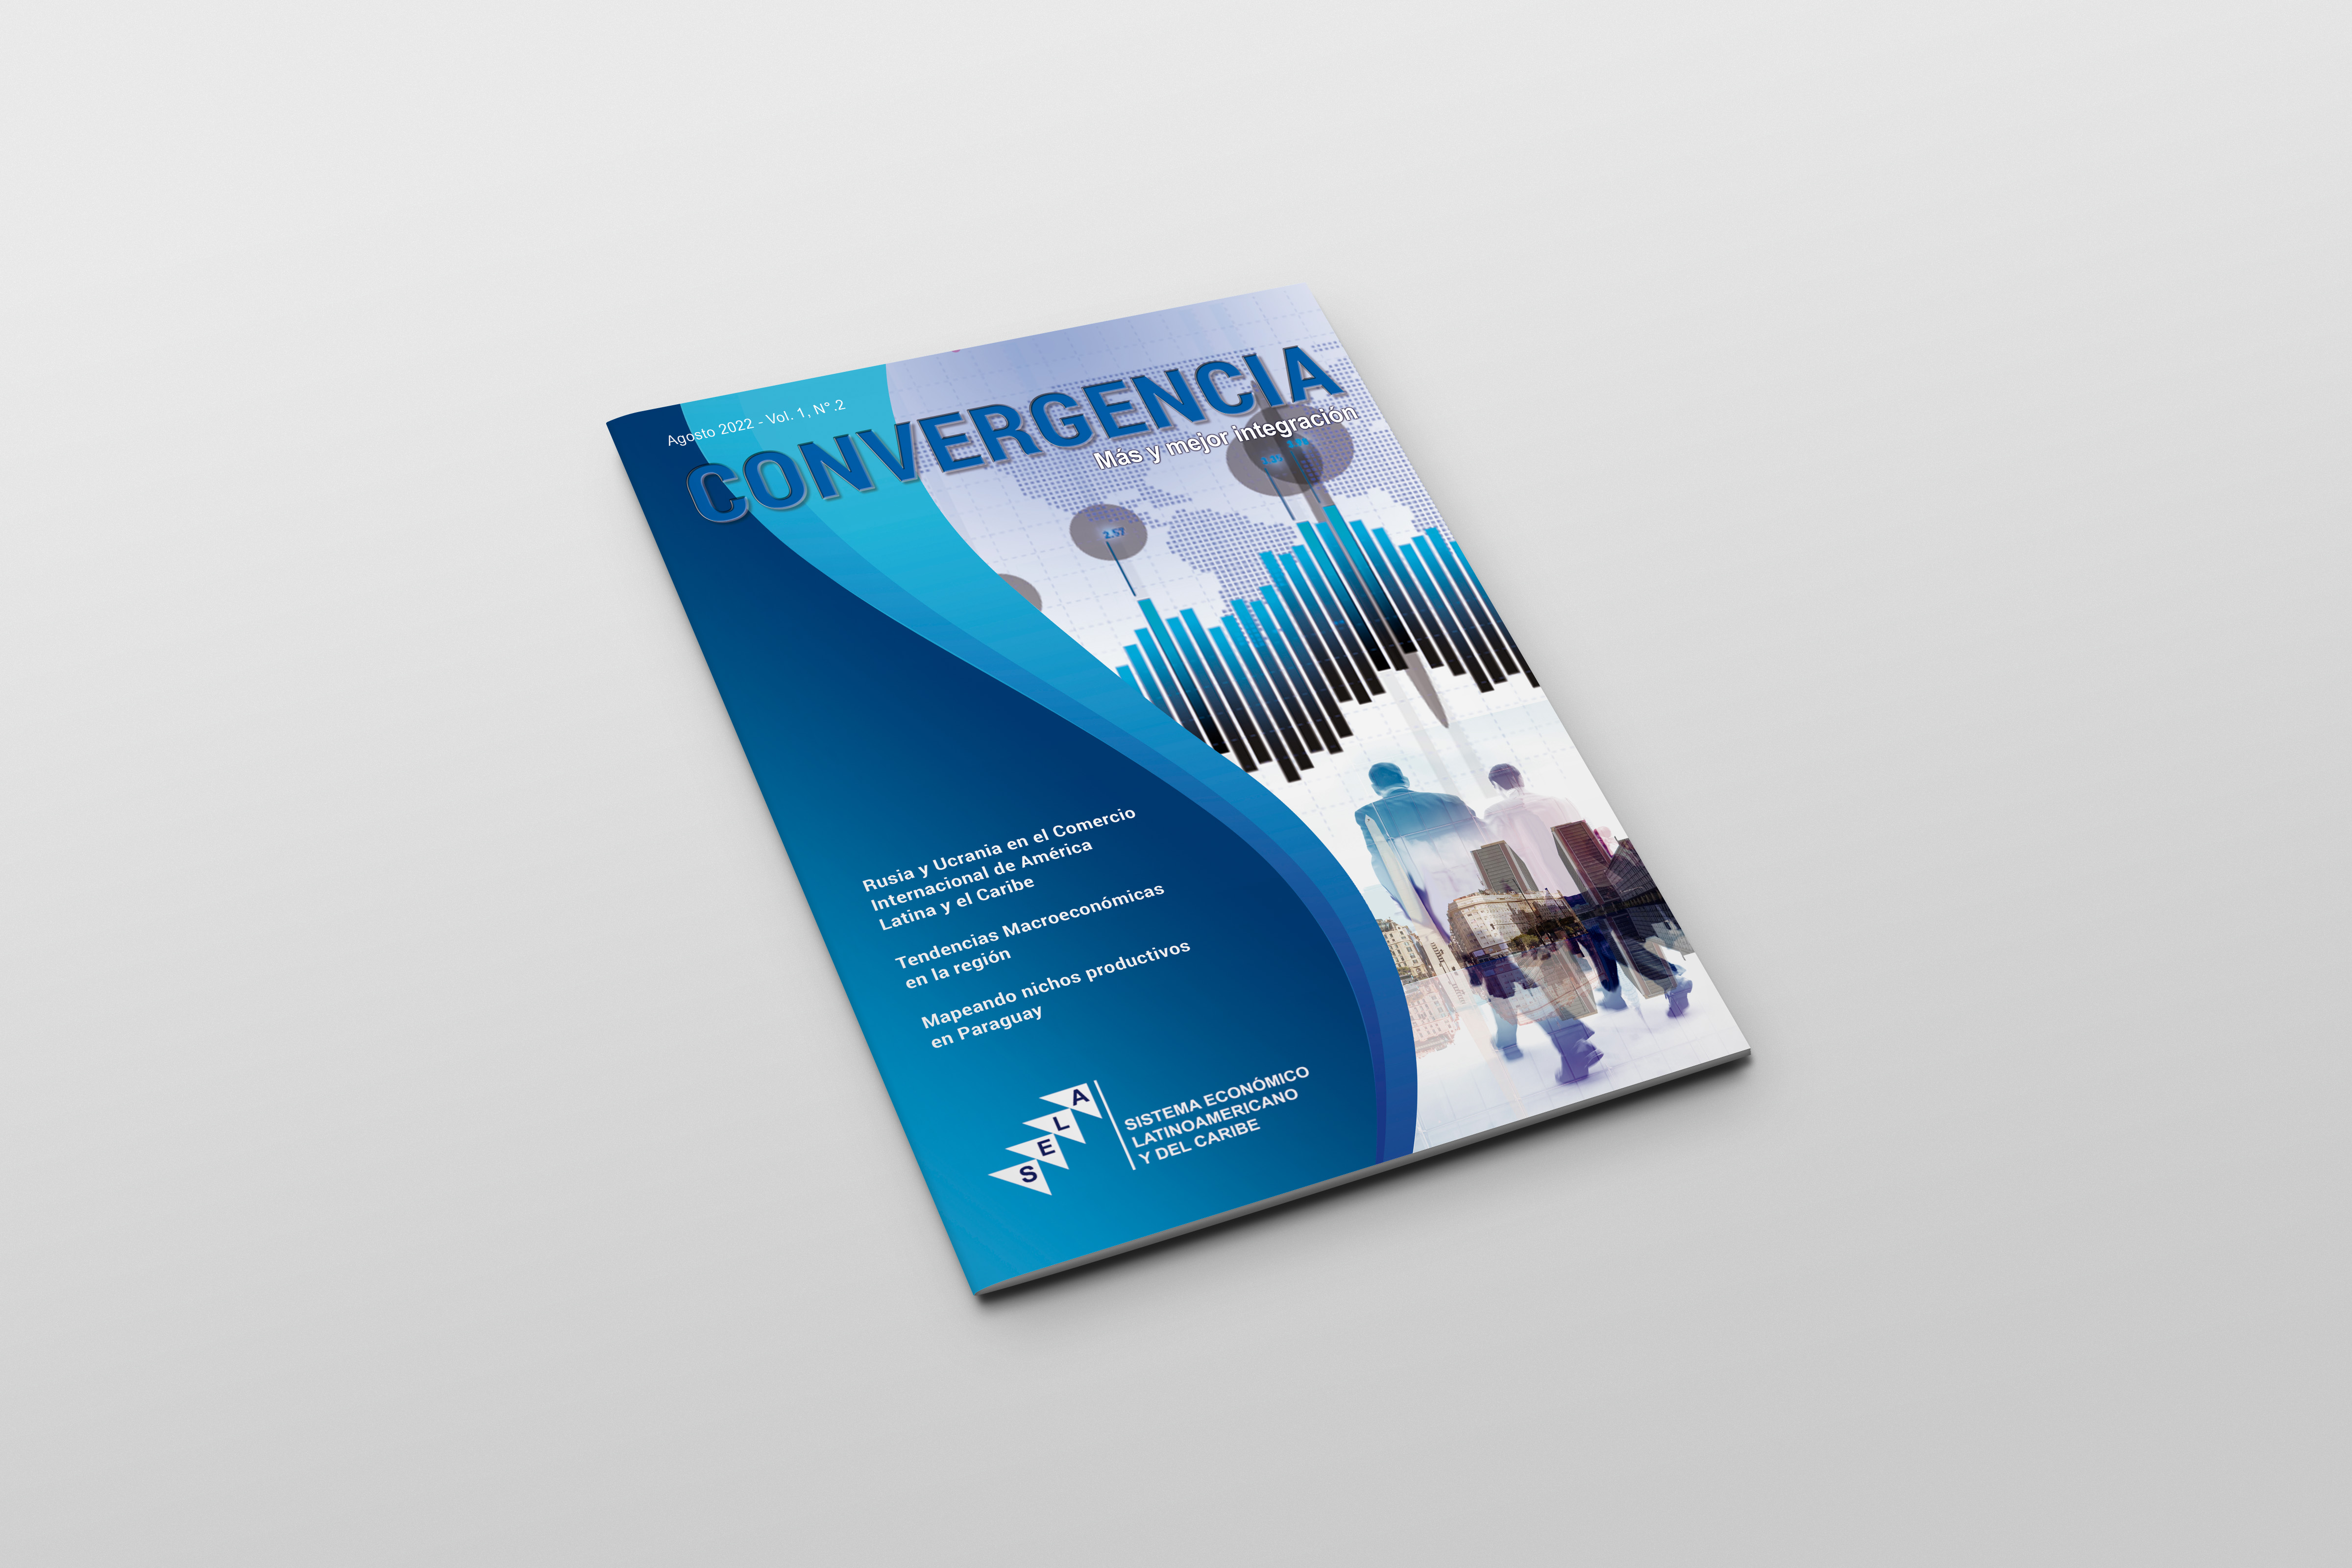 SELA’s journal Convergencia: Macroeconomic trends in the region